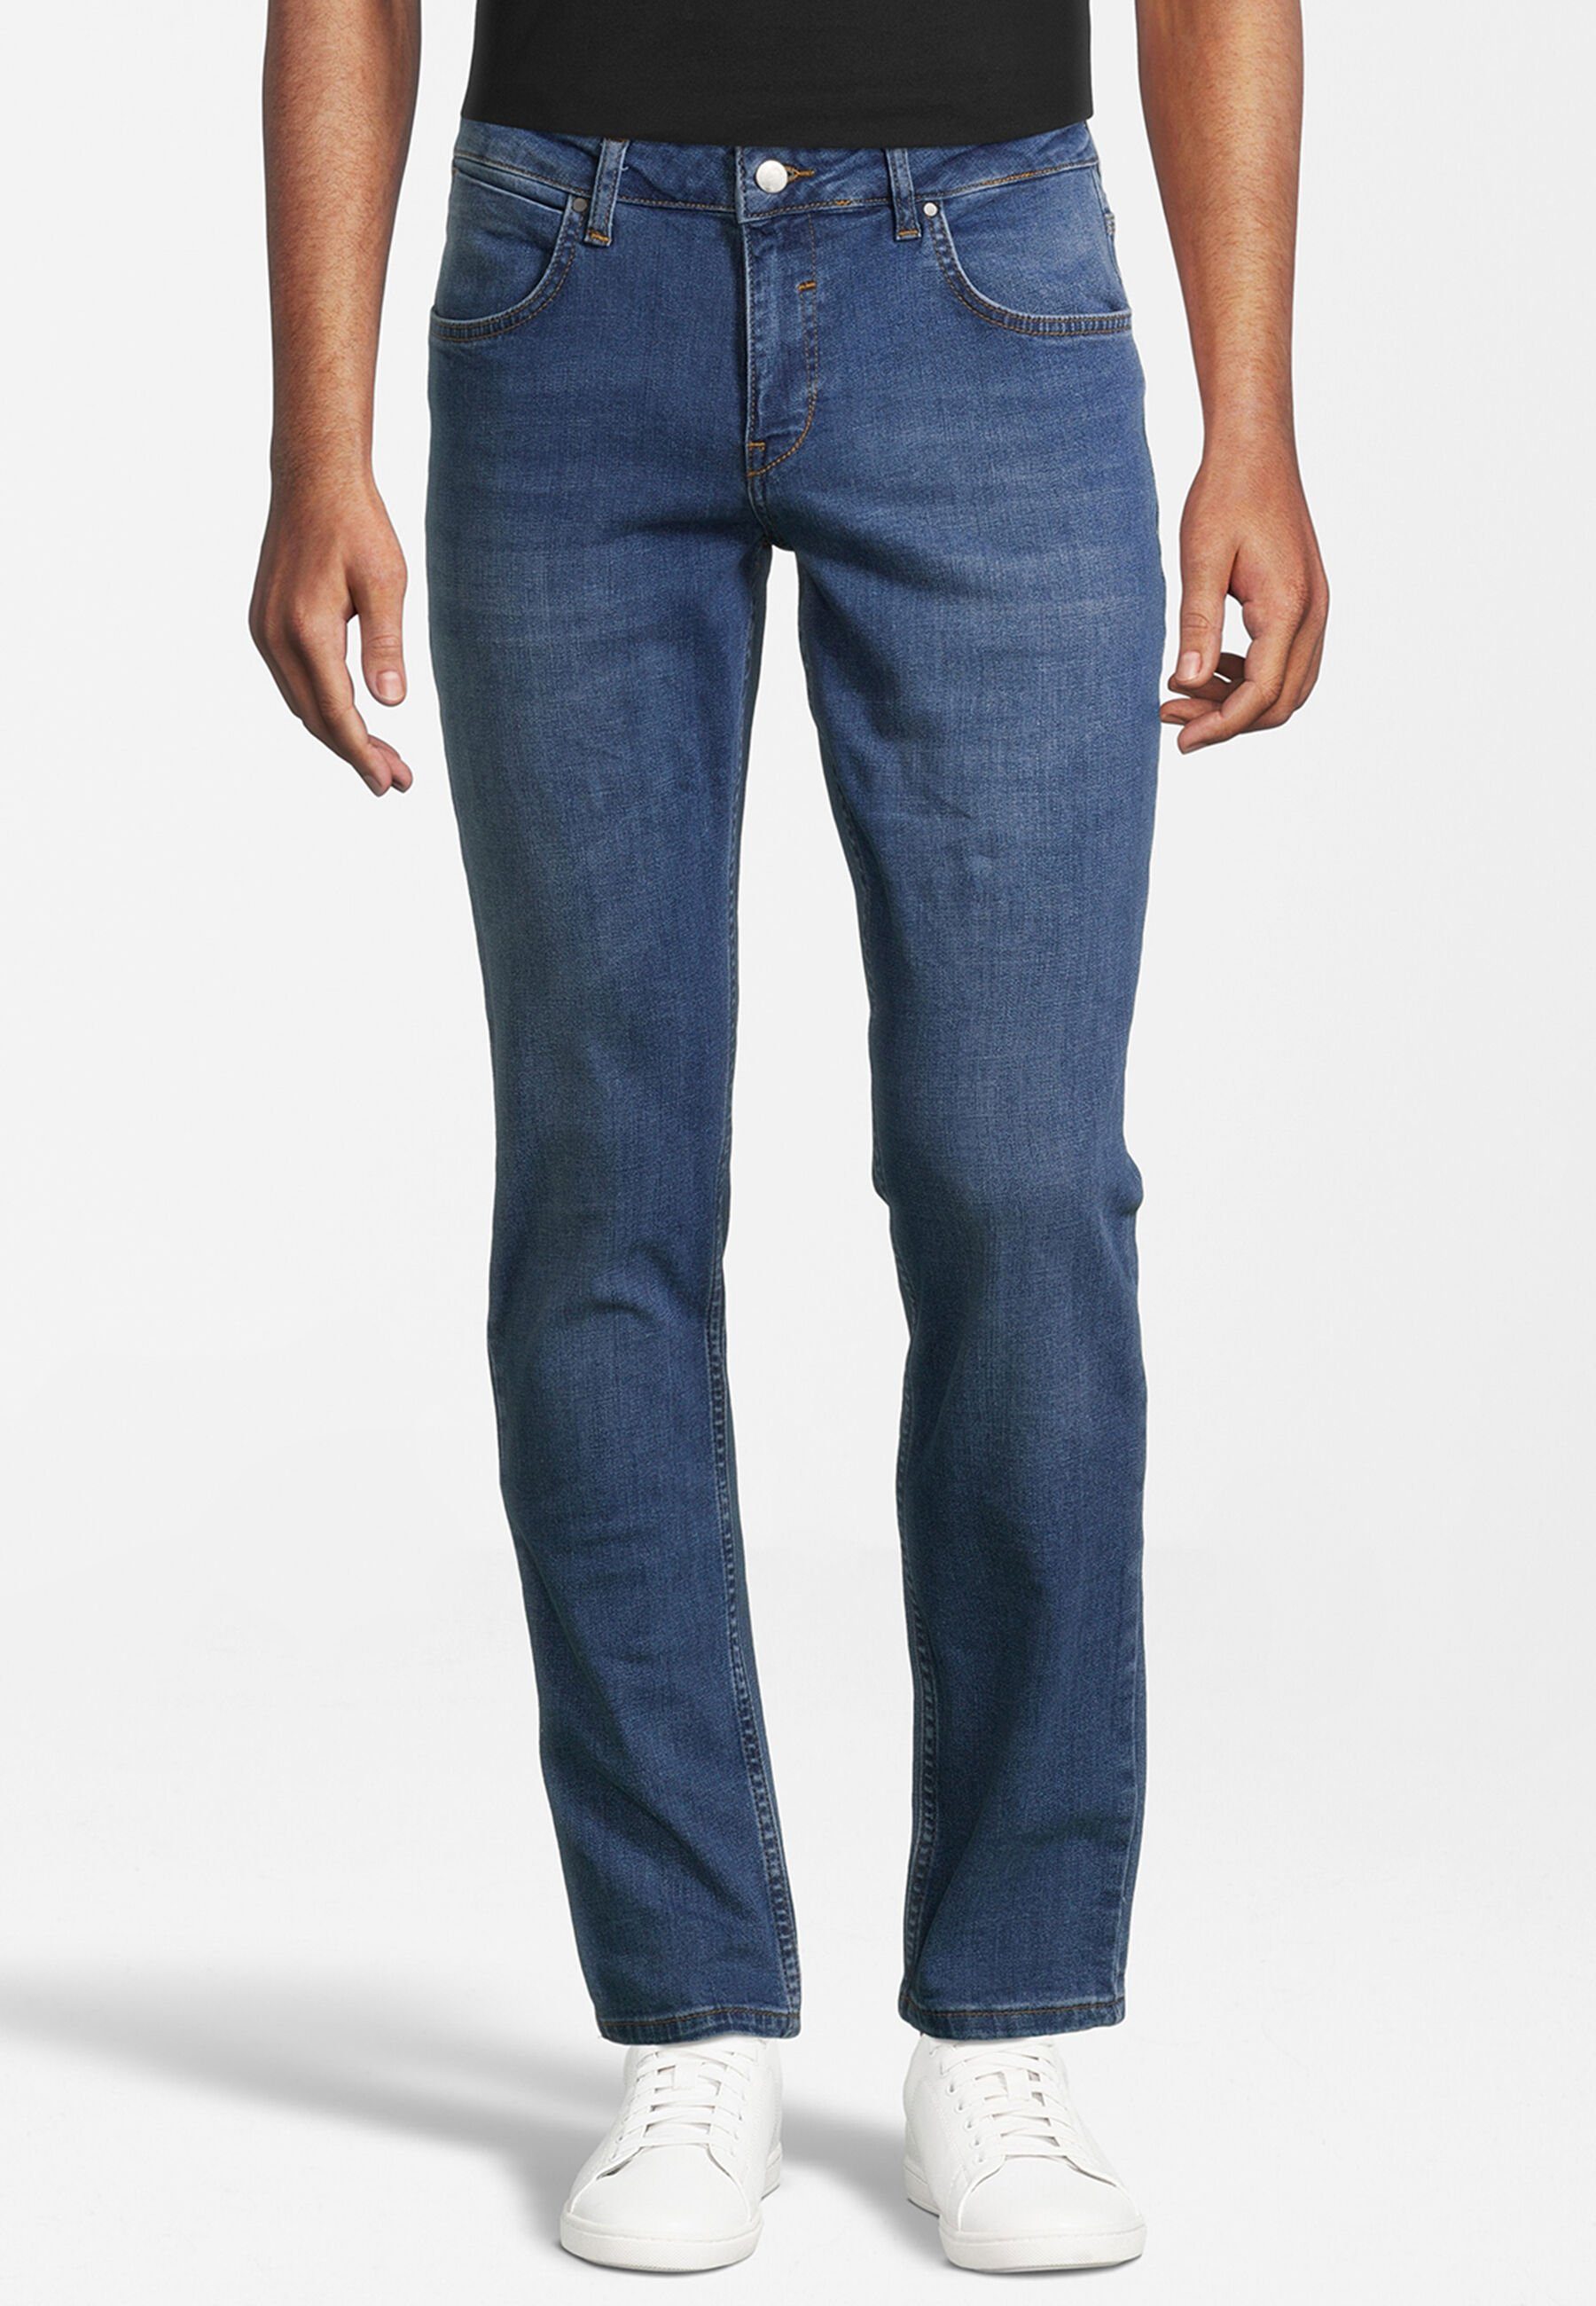 SteffenKlein Slim-fit-Jeans Blue denim | Slim-Fit Jeans